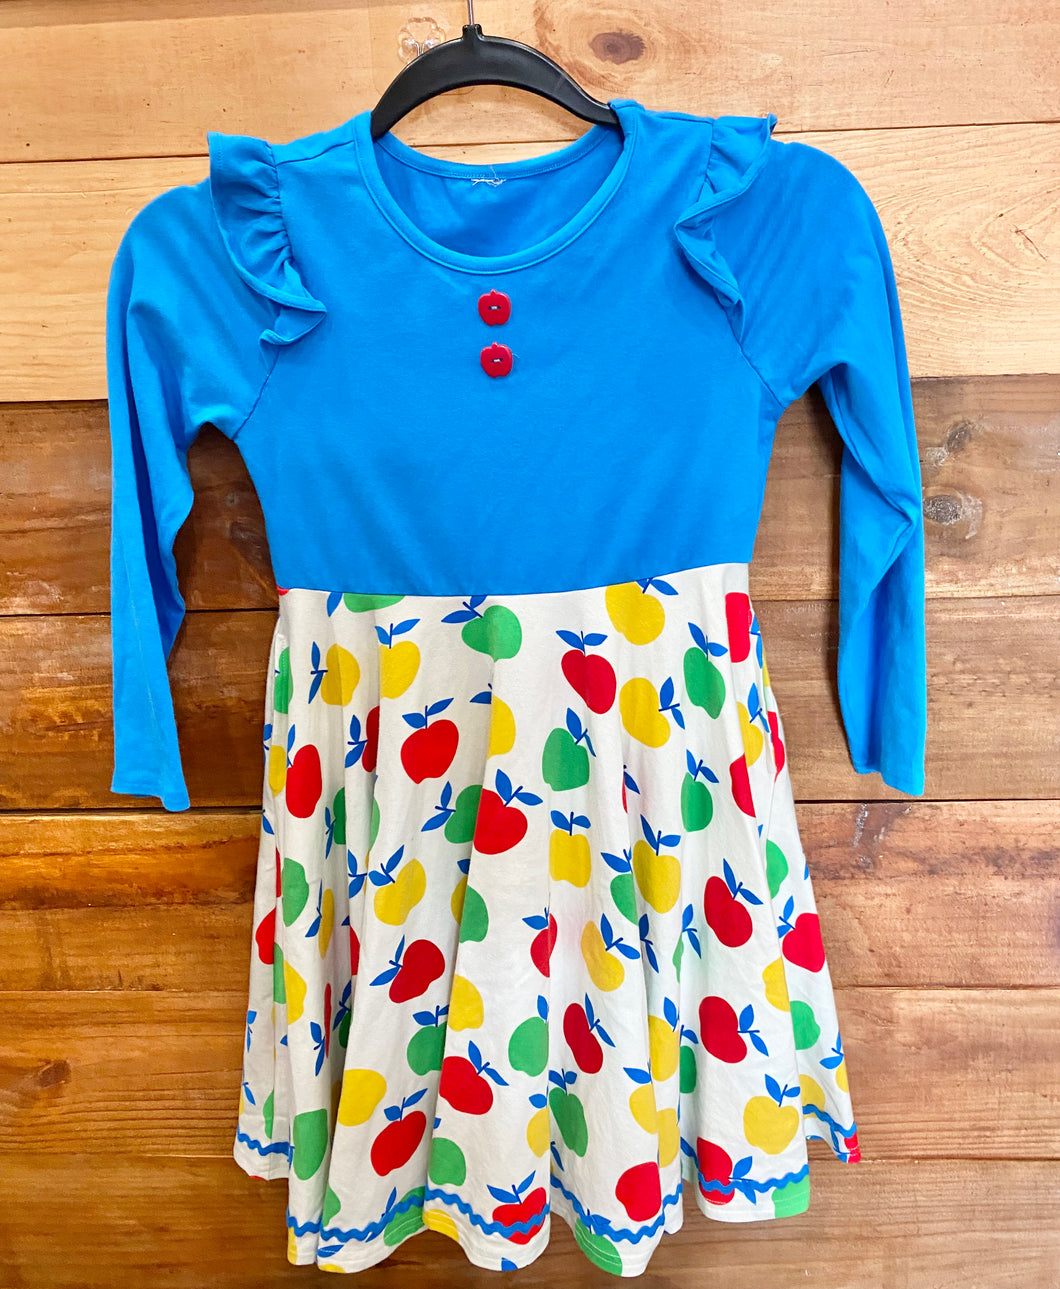 Eleanor Rose Apples Dress Size 7/8